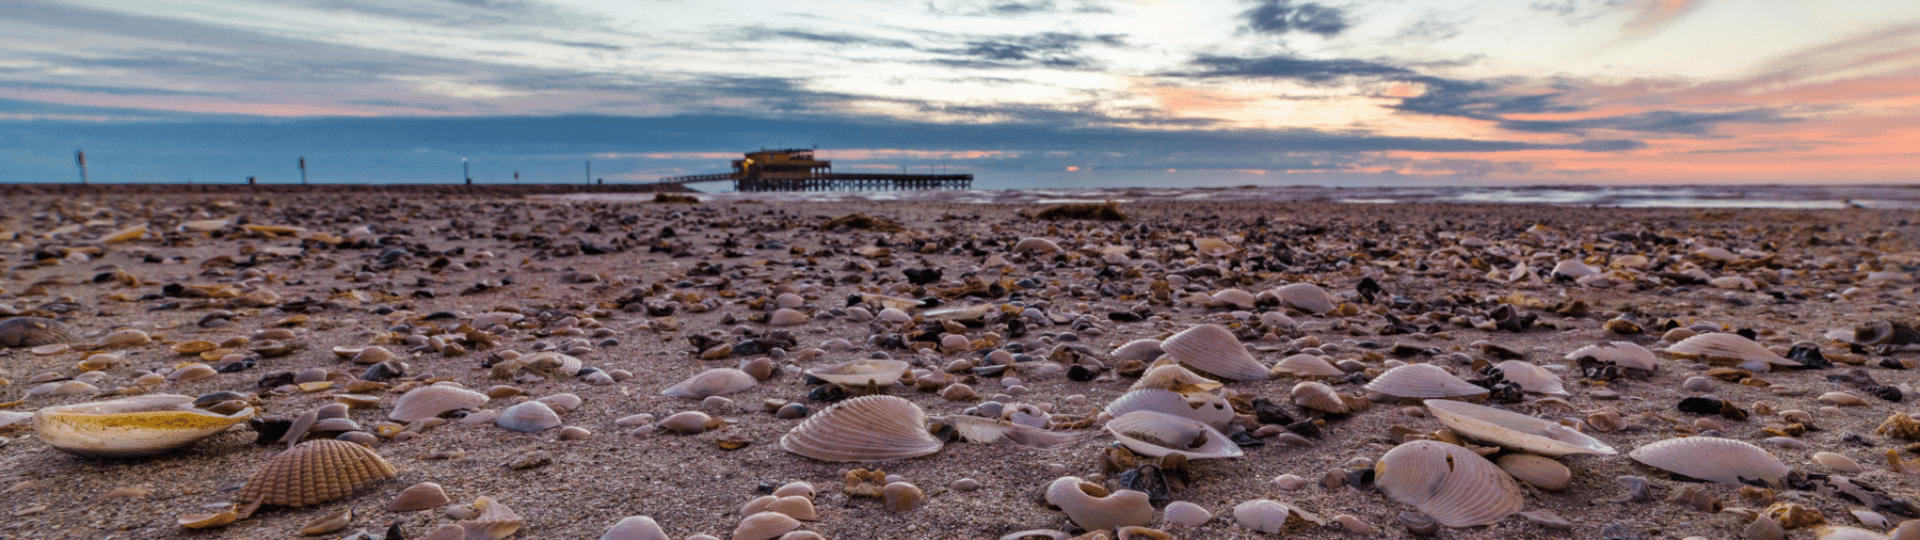 Shells on beach in Galveston TX